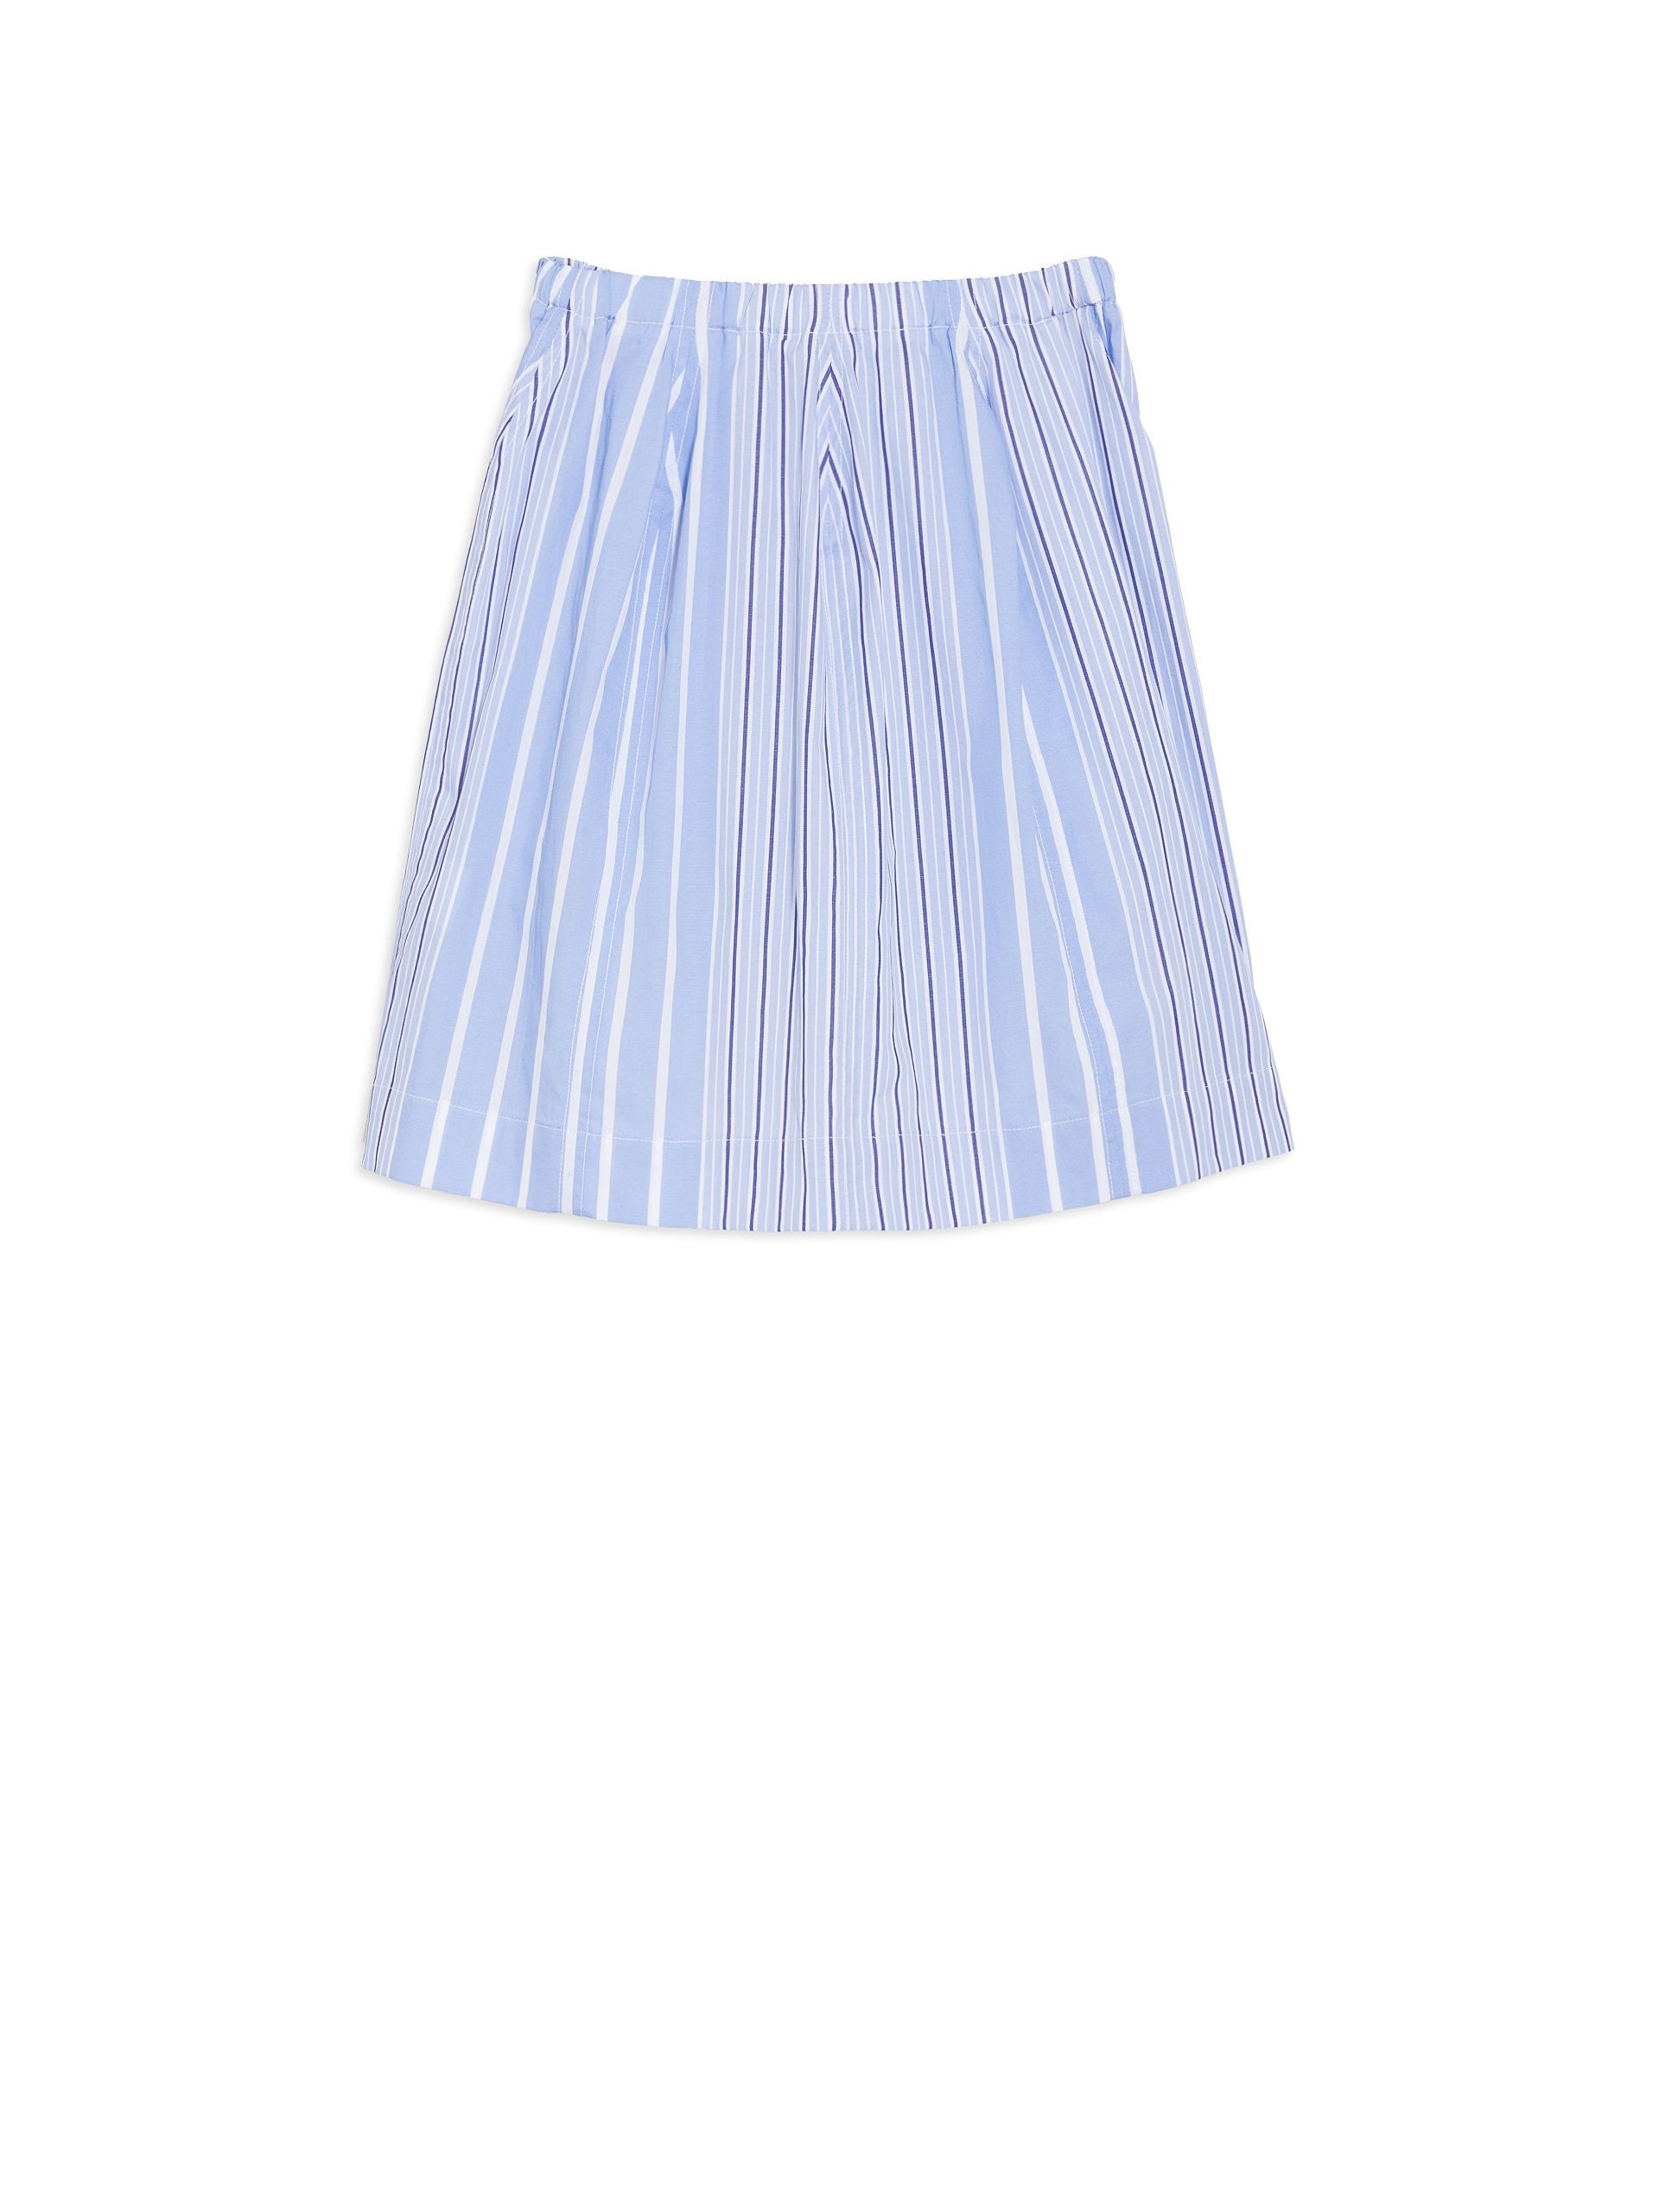 Girls Sky Blue Striped Cotton Skirt